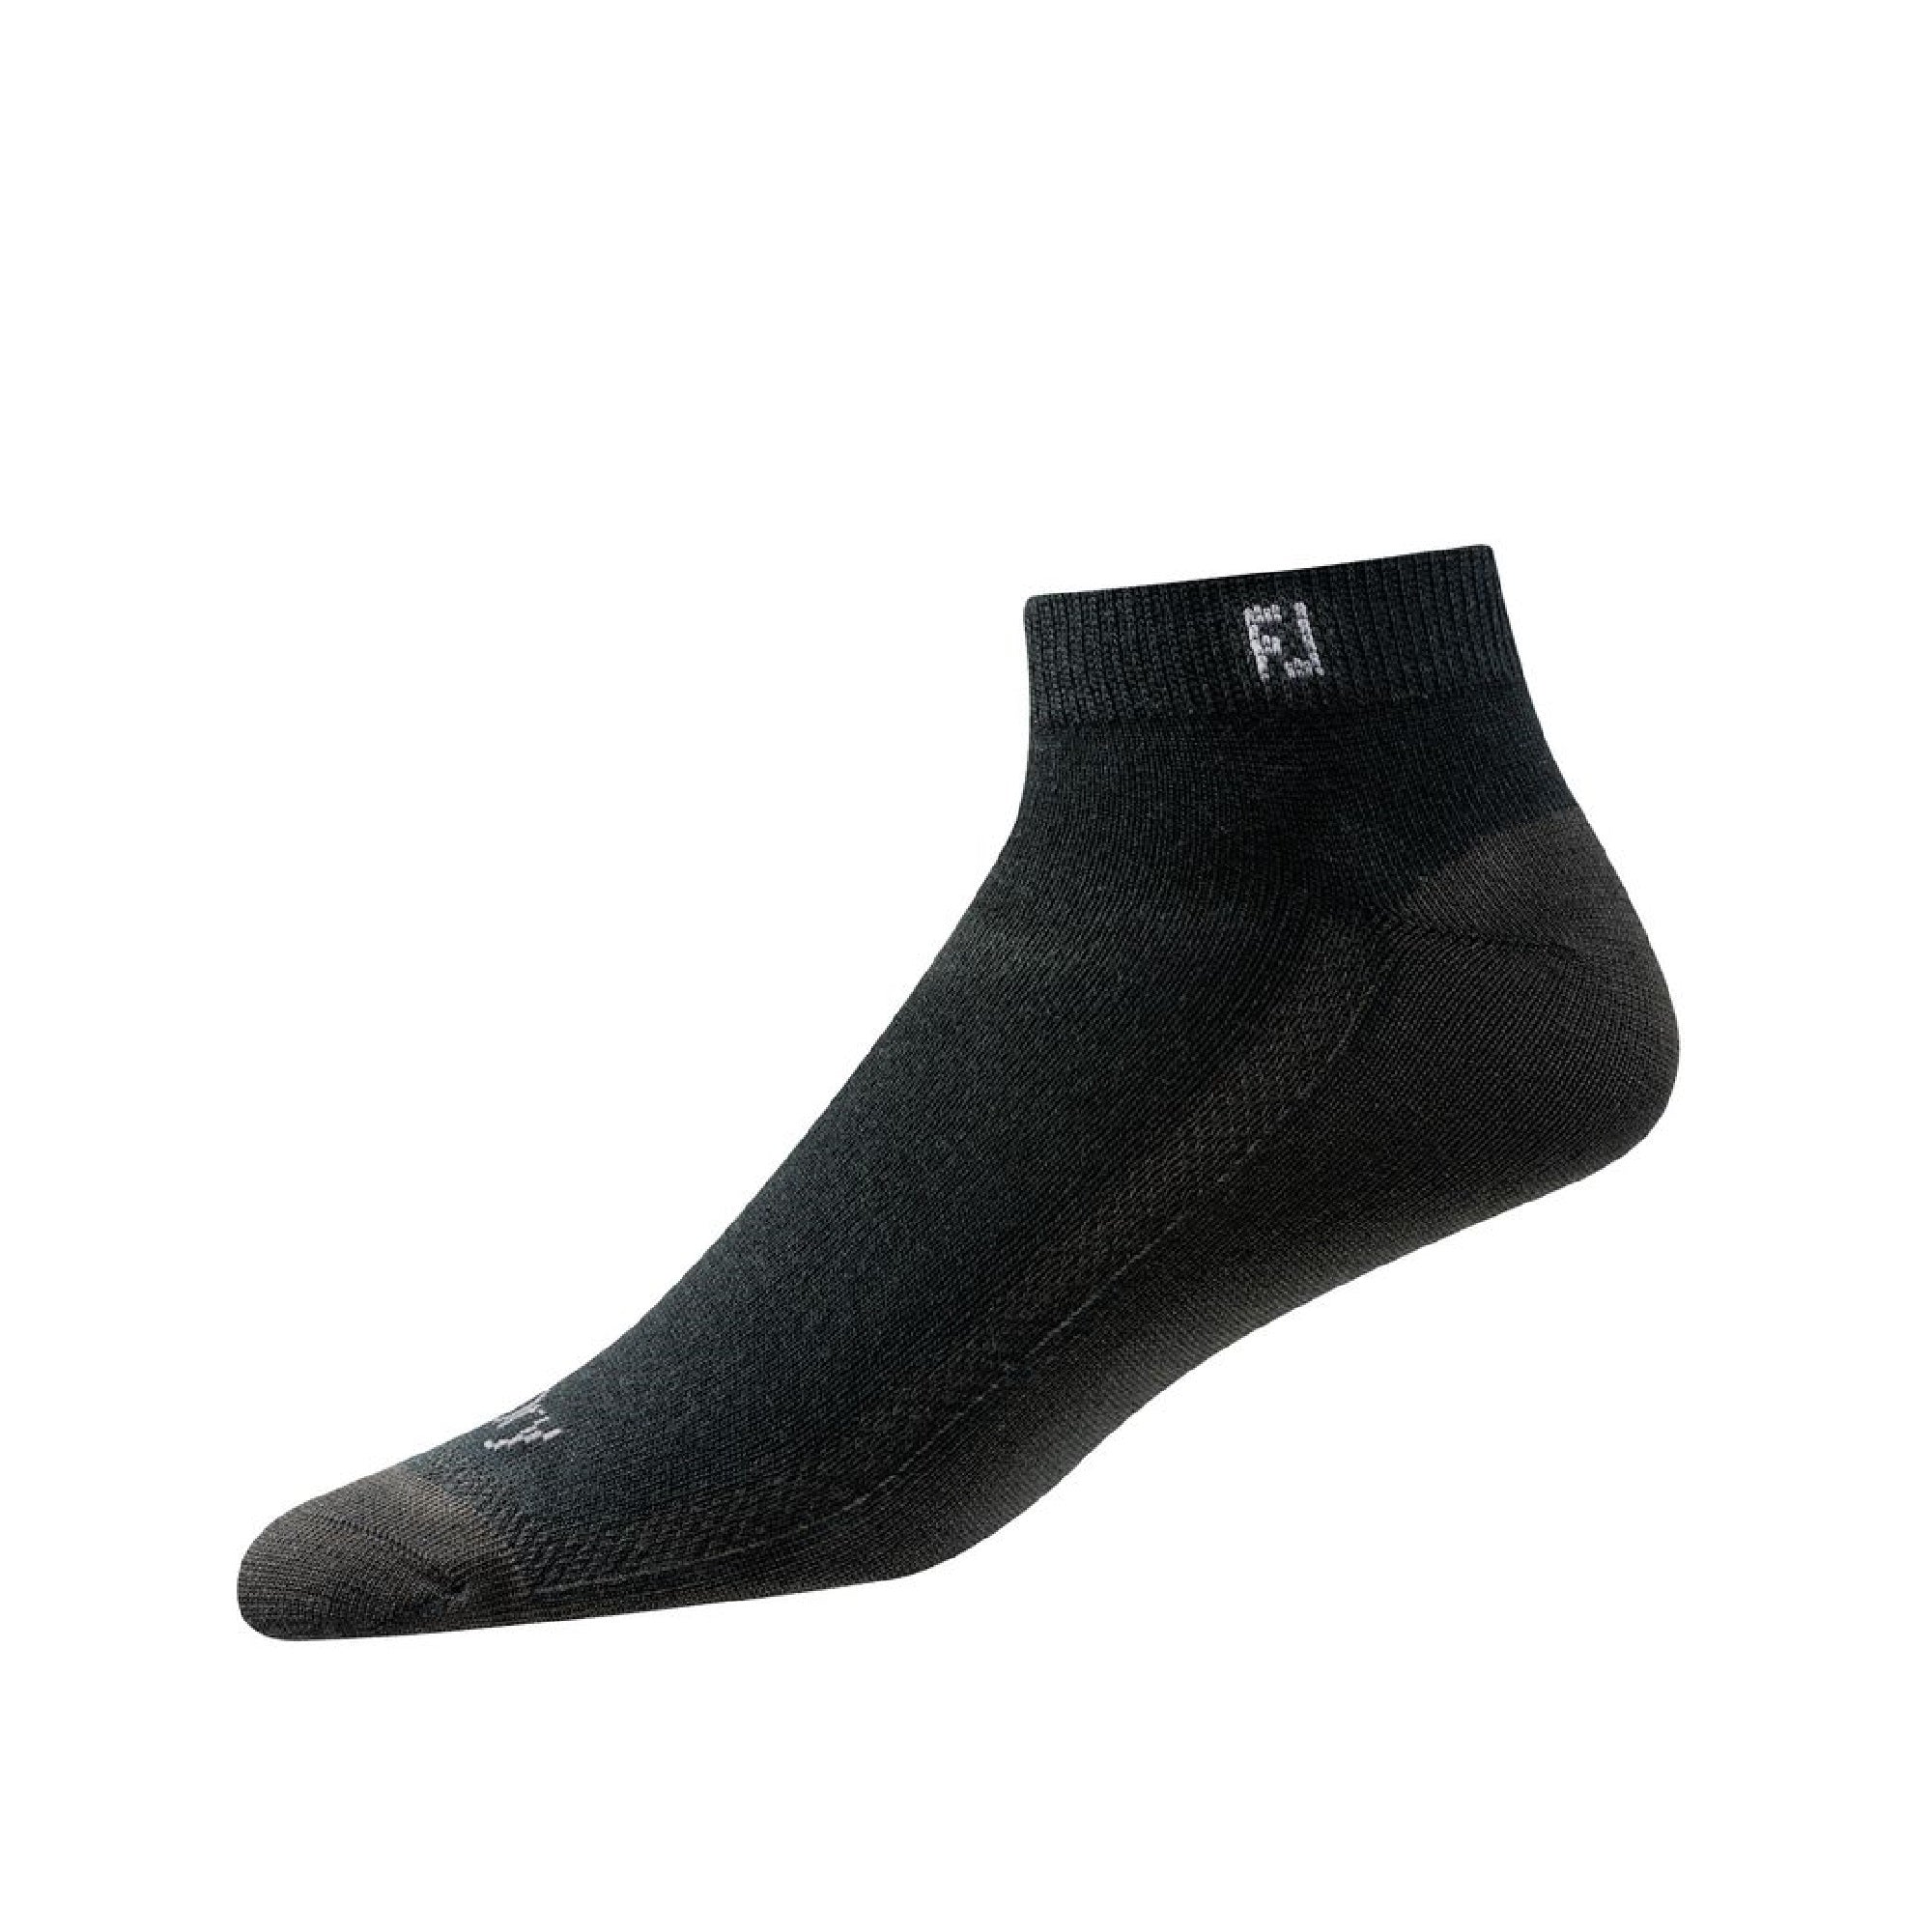 footjoy-prodry-lightweight-sport-golf-socks-17038